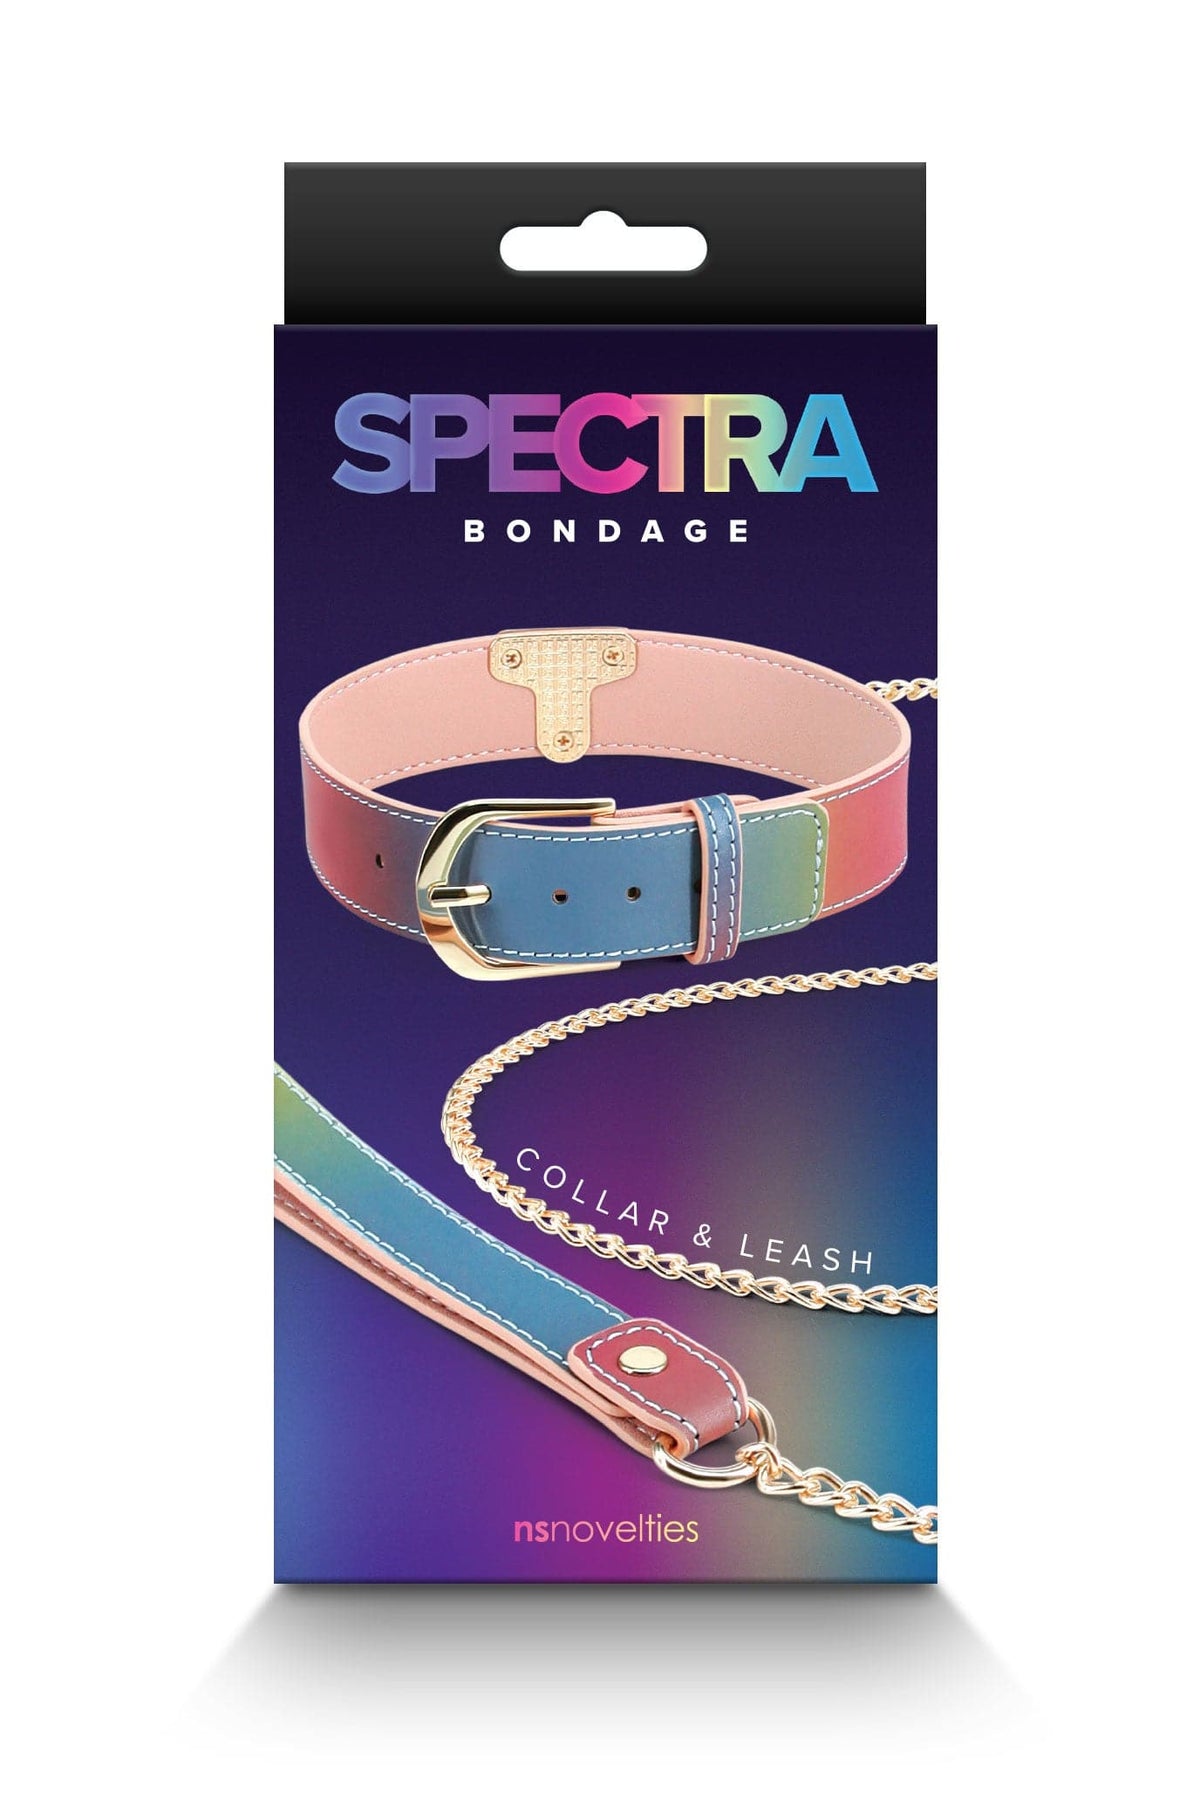 spectra bondage collar and leash rainbow